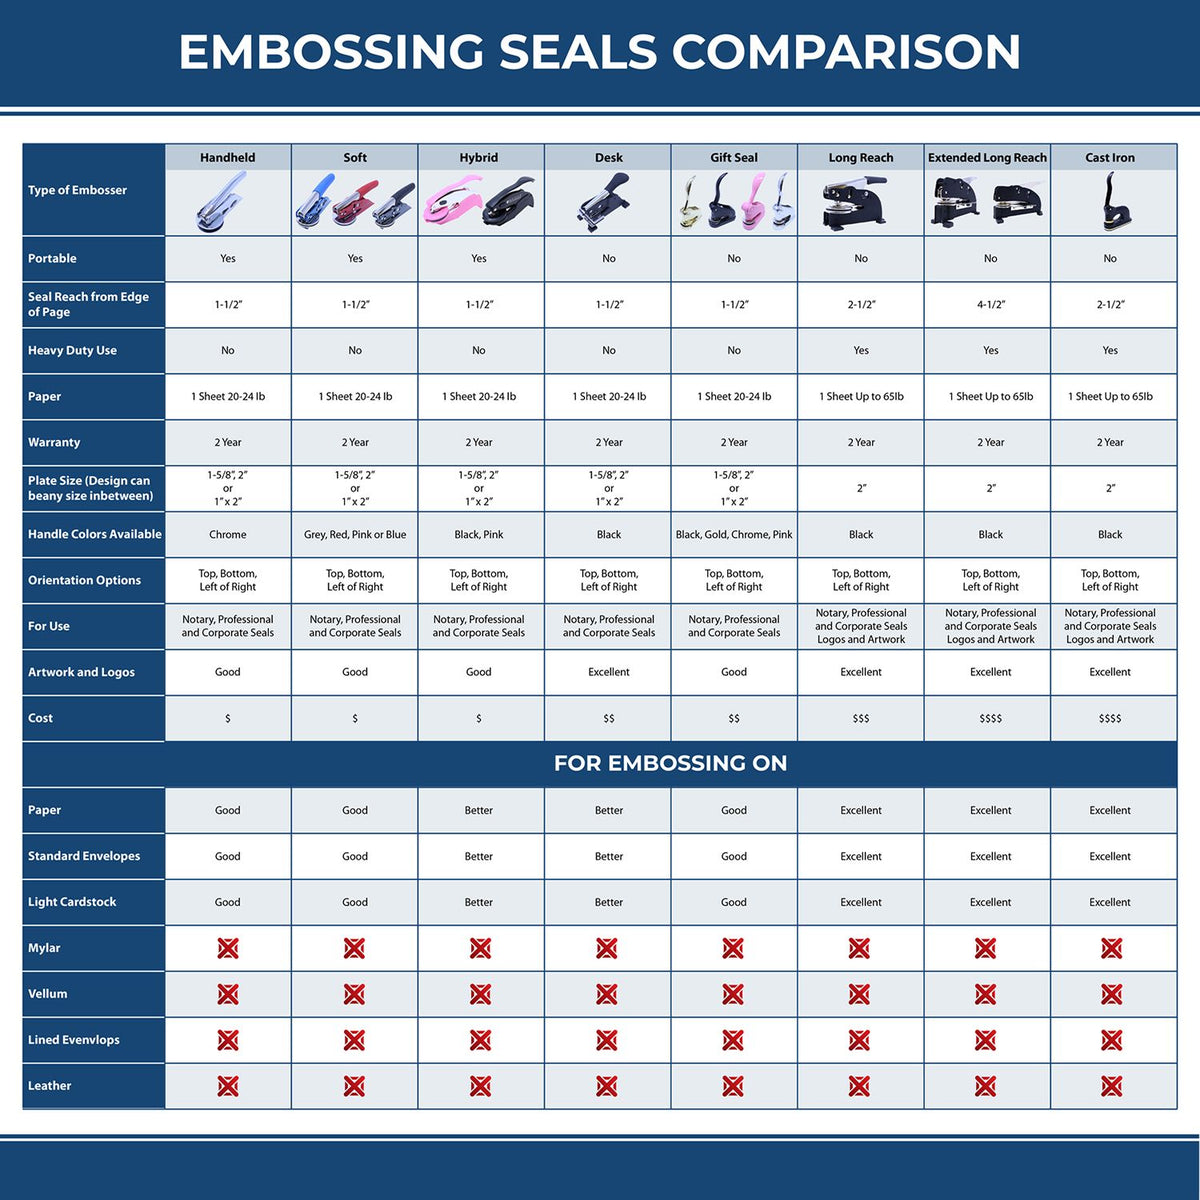 Real Estate Appraiser Gold Gift Seal Embosser 3026REA Embossing Seal Comparison